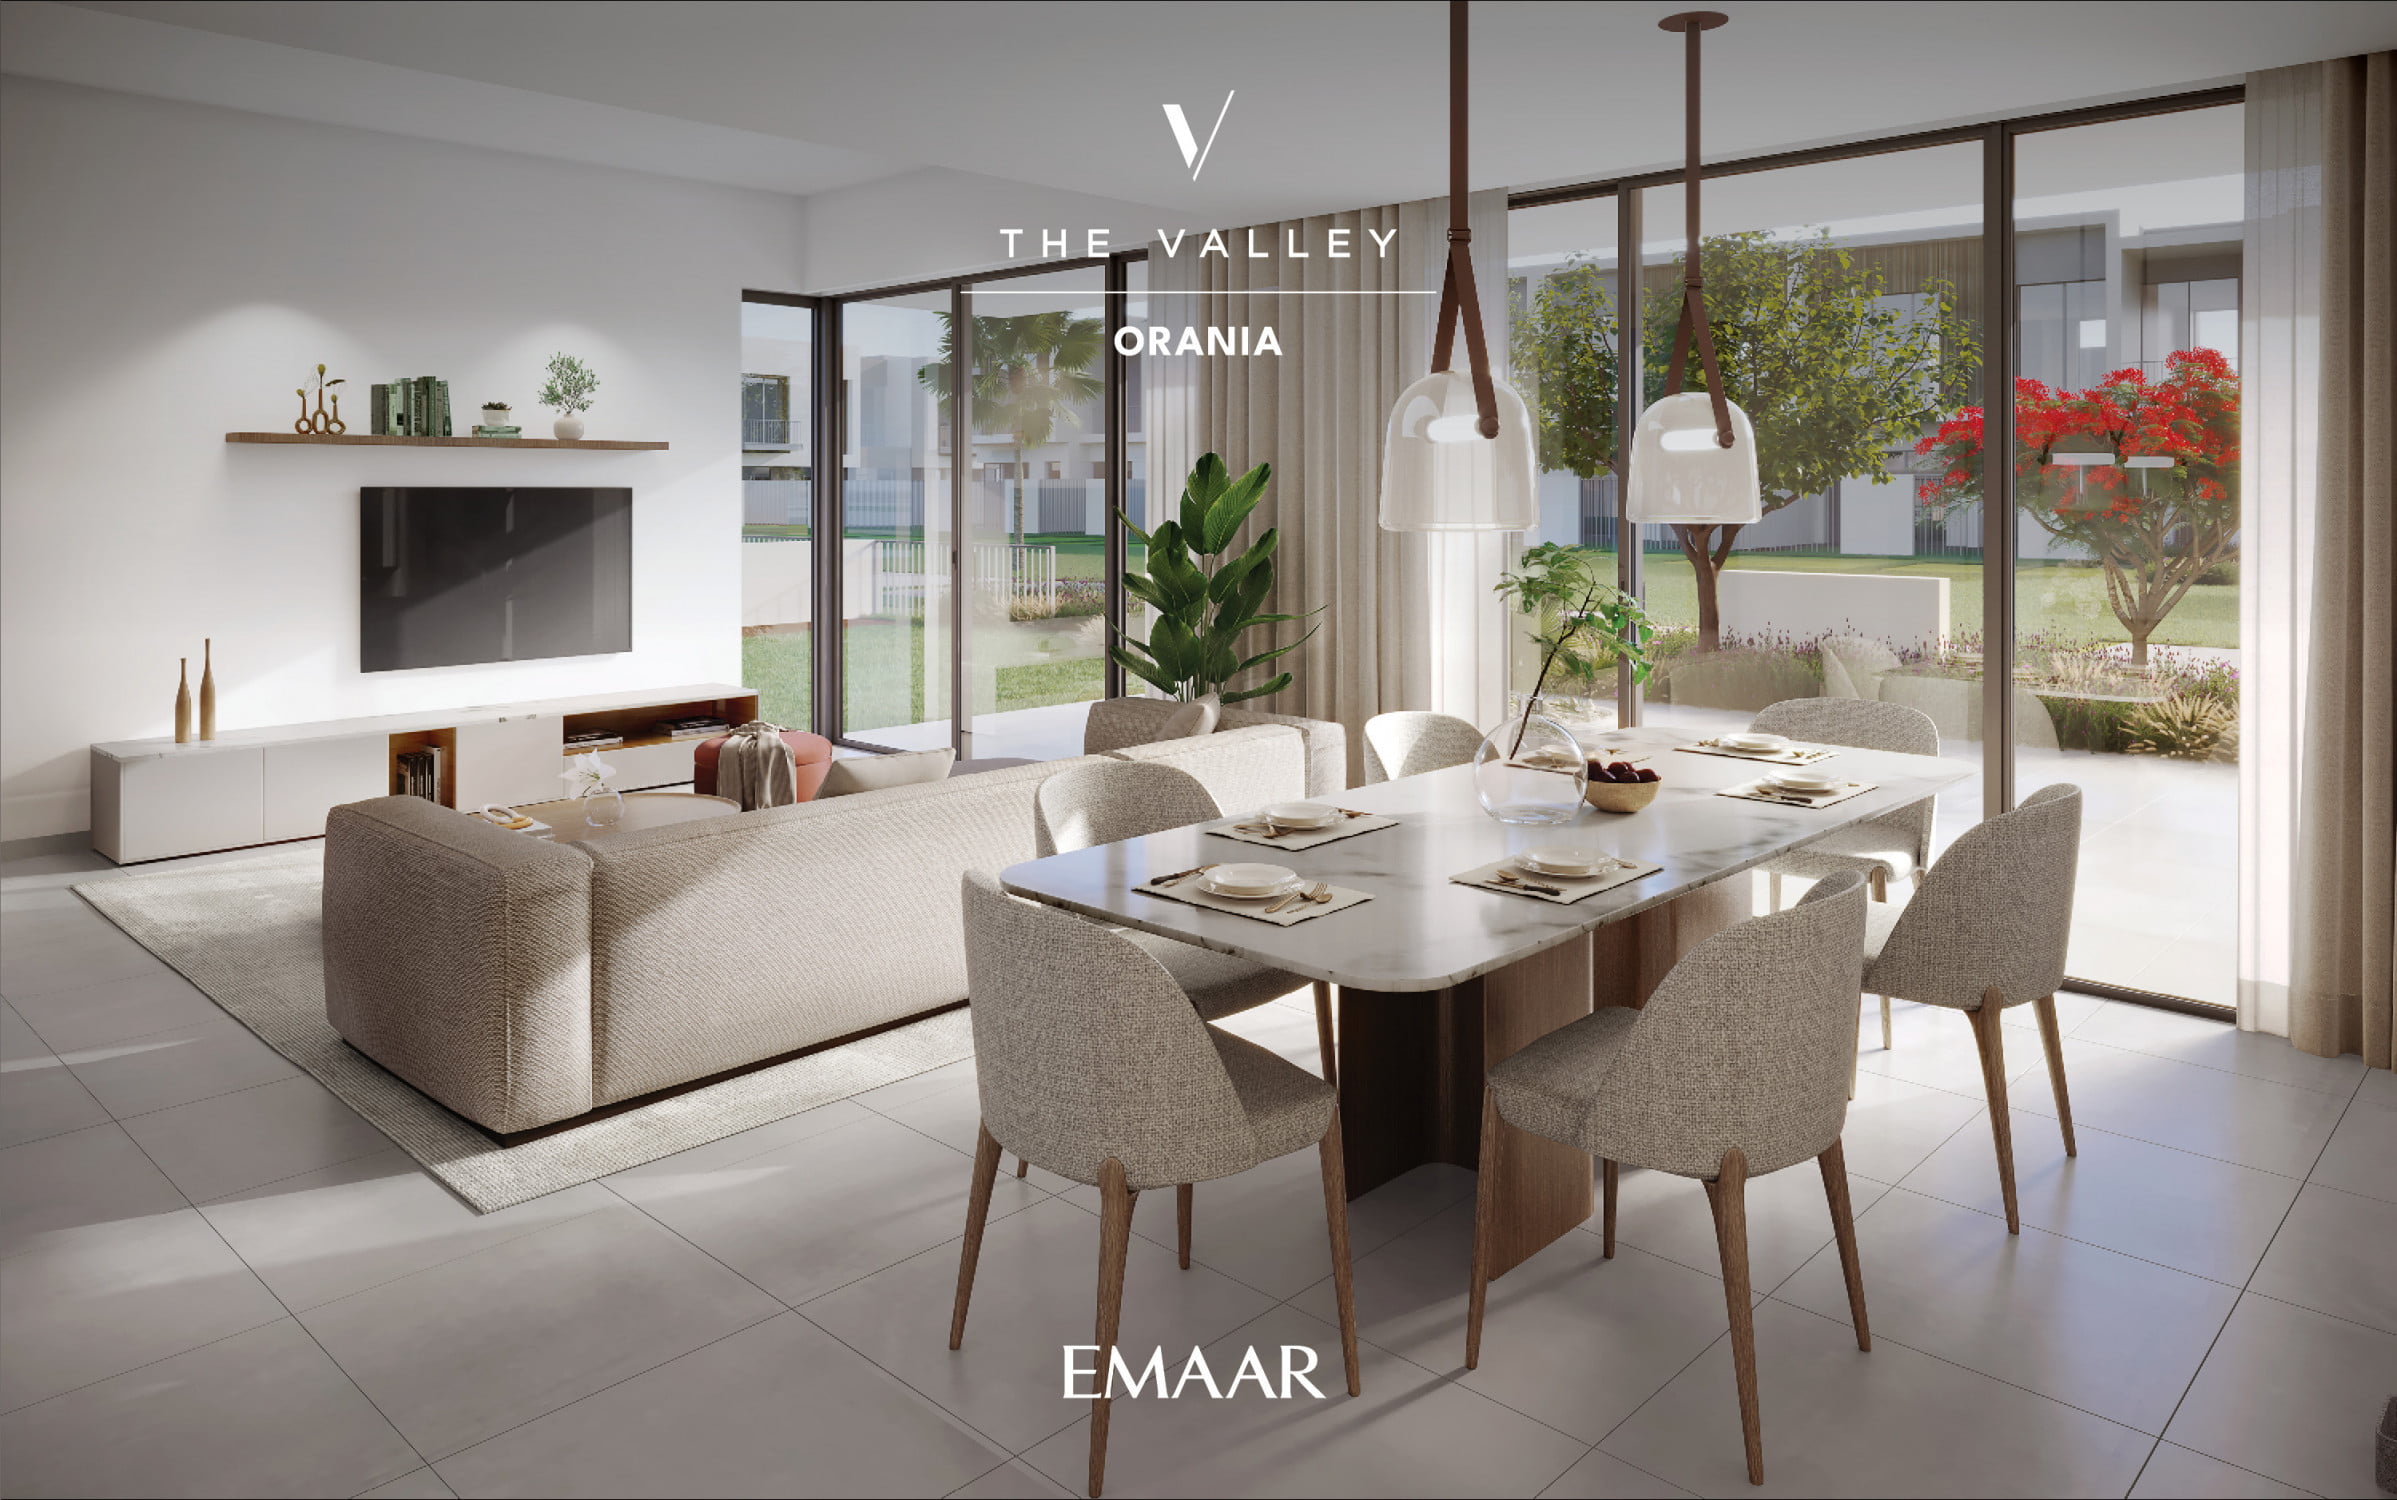 ORANIA THE VALLEY EMAAR 16 - Immobilier Dubai